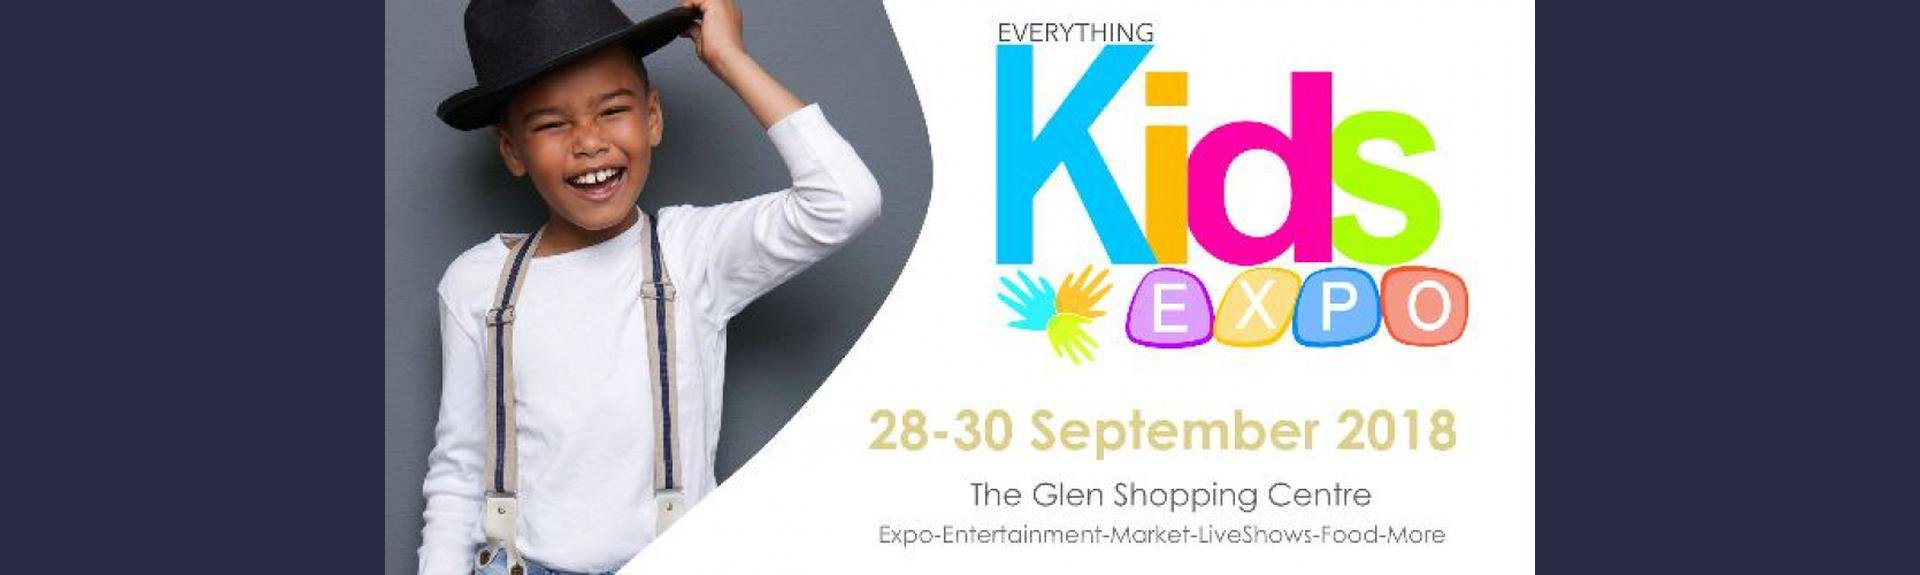 Everything Kids Expo - Glen Shopping Centre